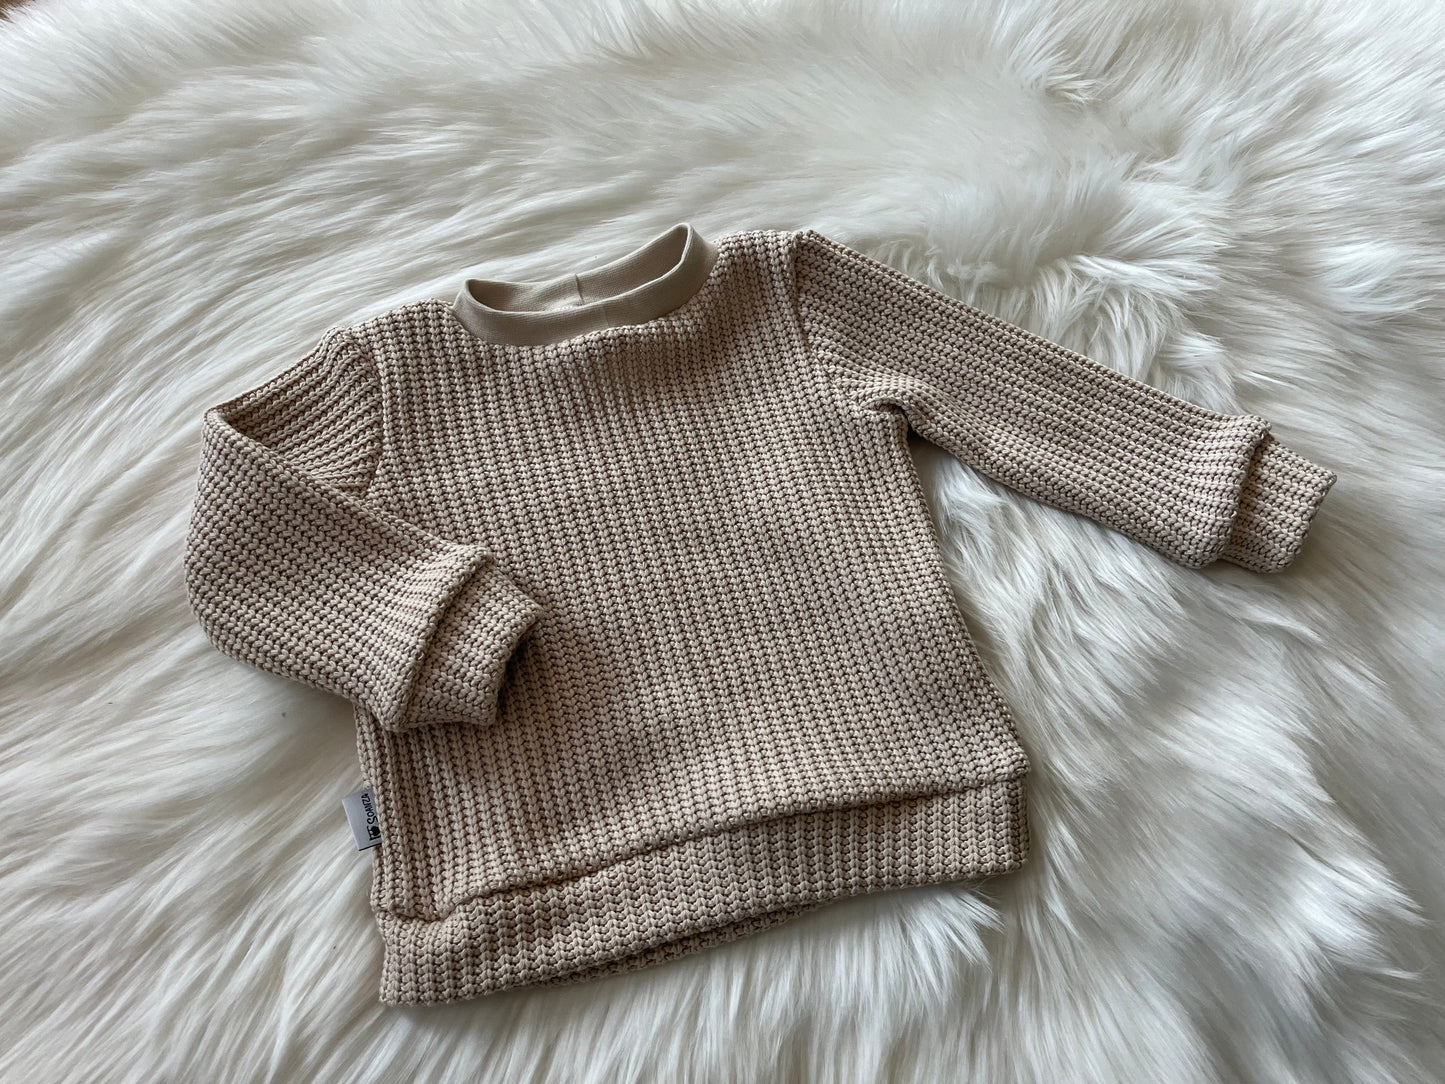 Stricksweater